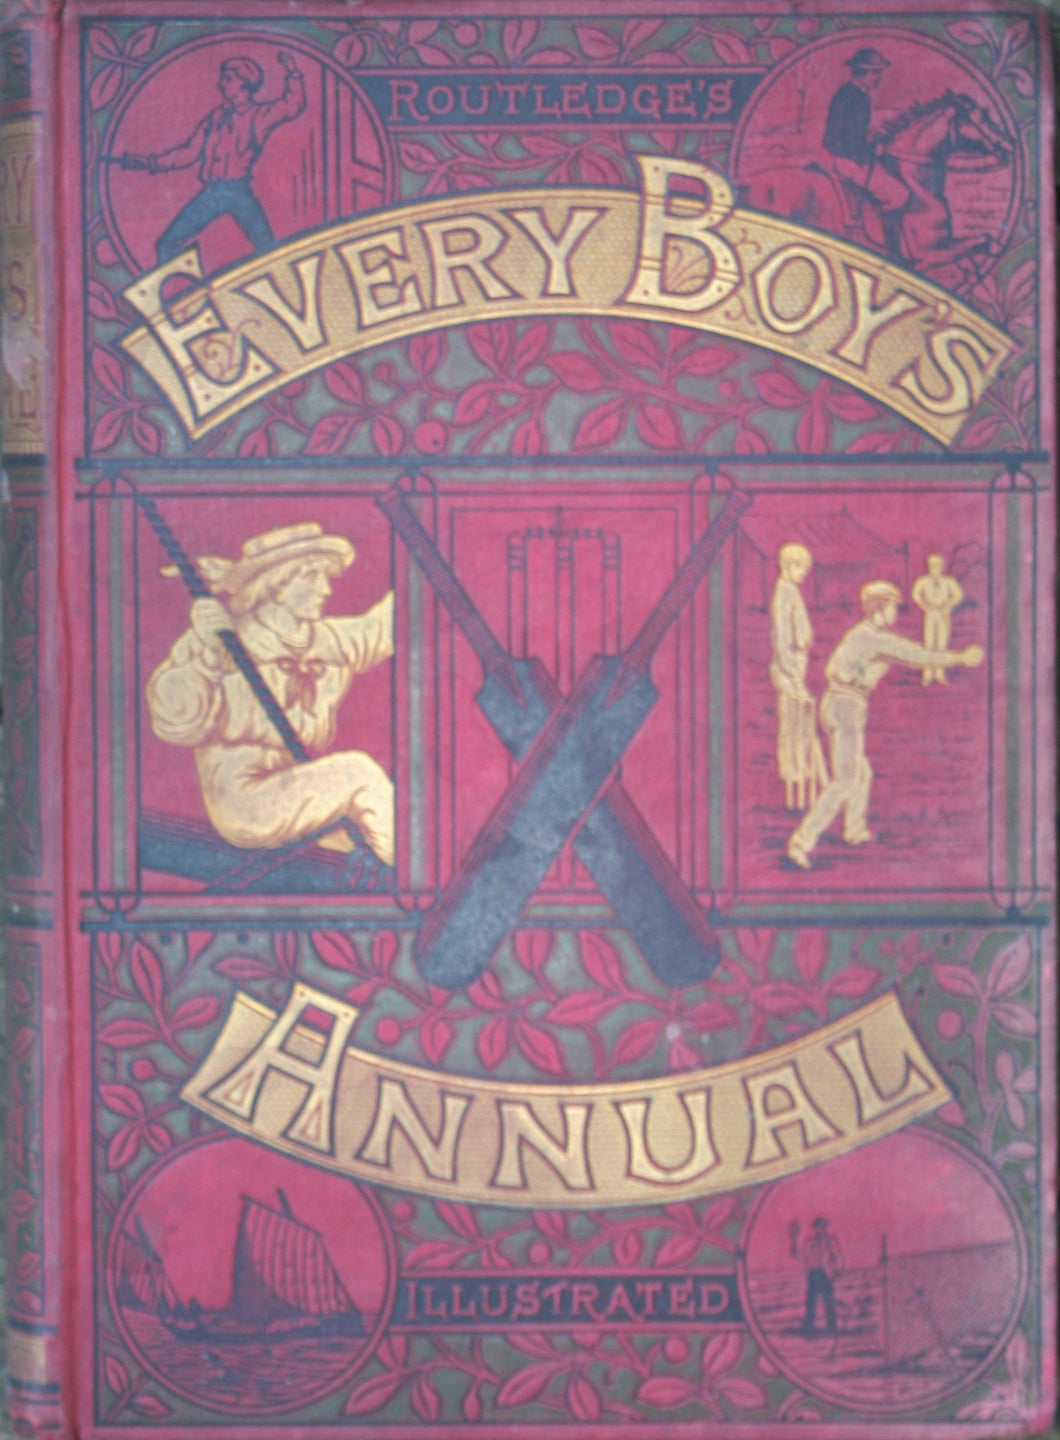 Every Boy's Annual, 1884 - Featuring The Zulu War